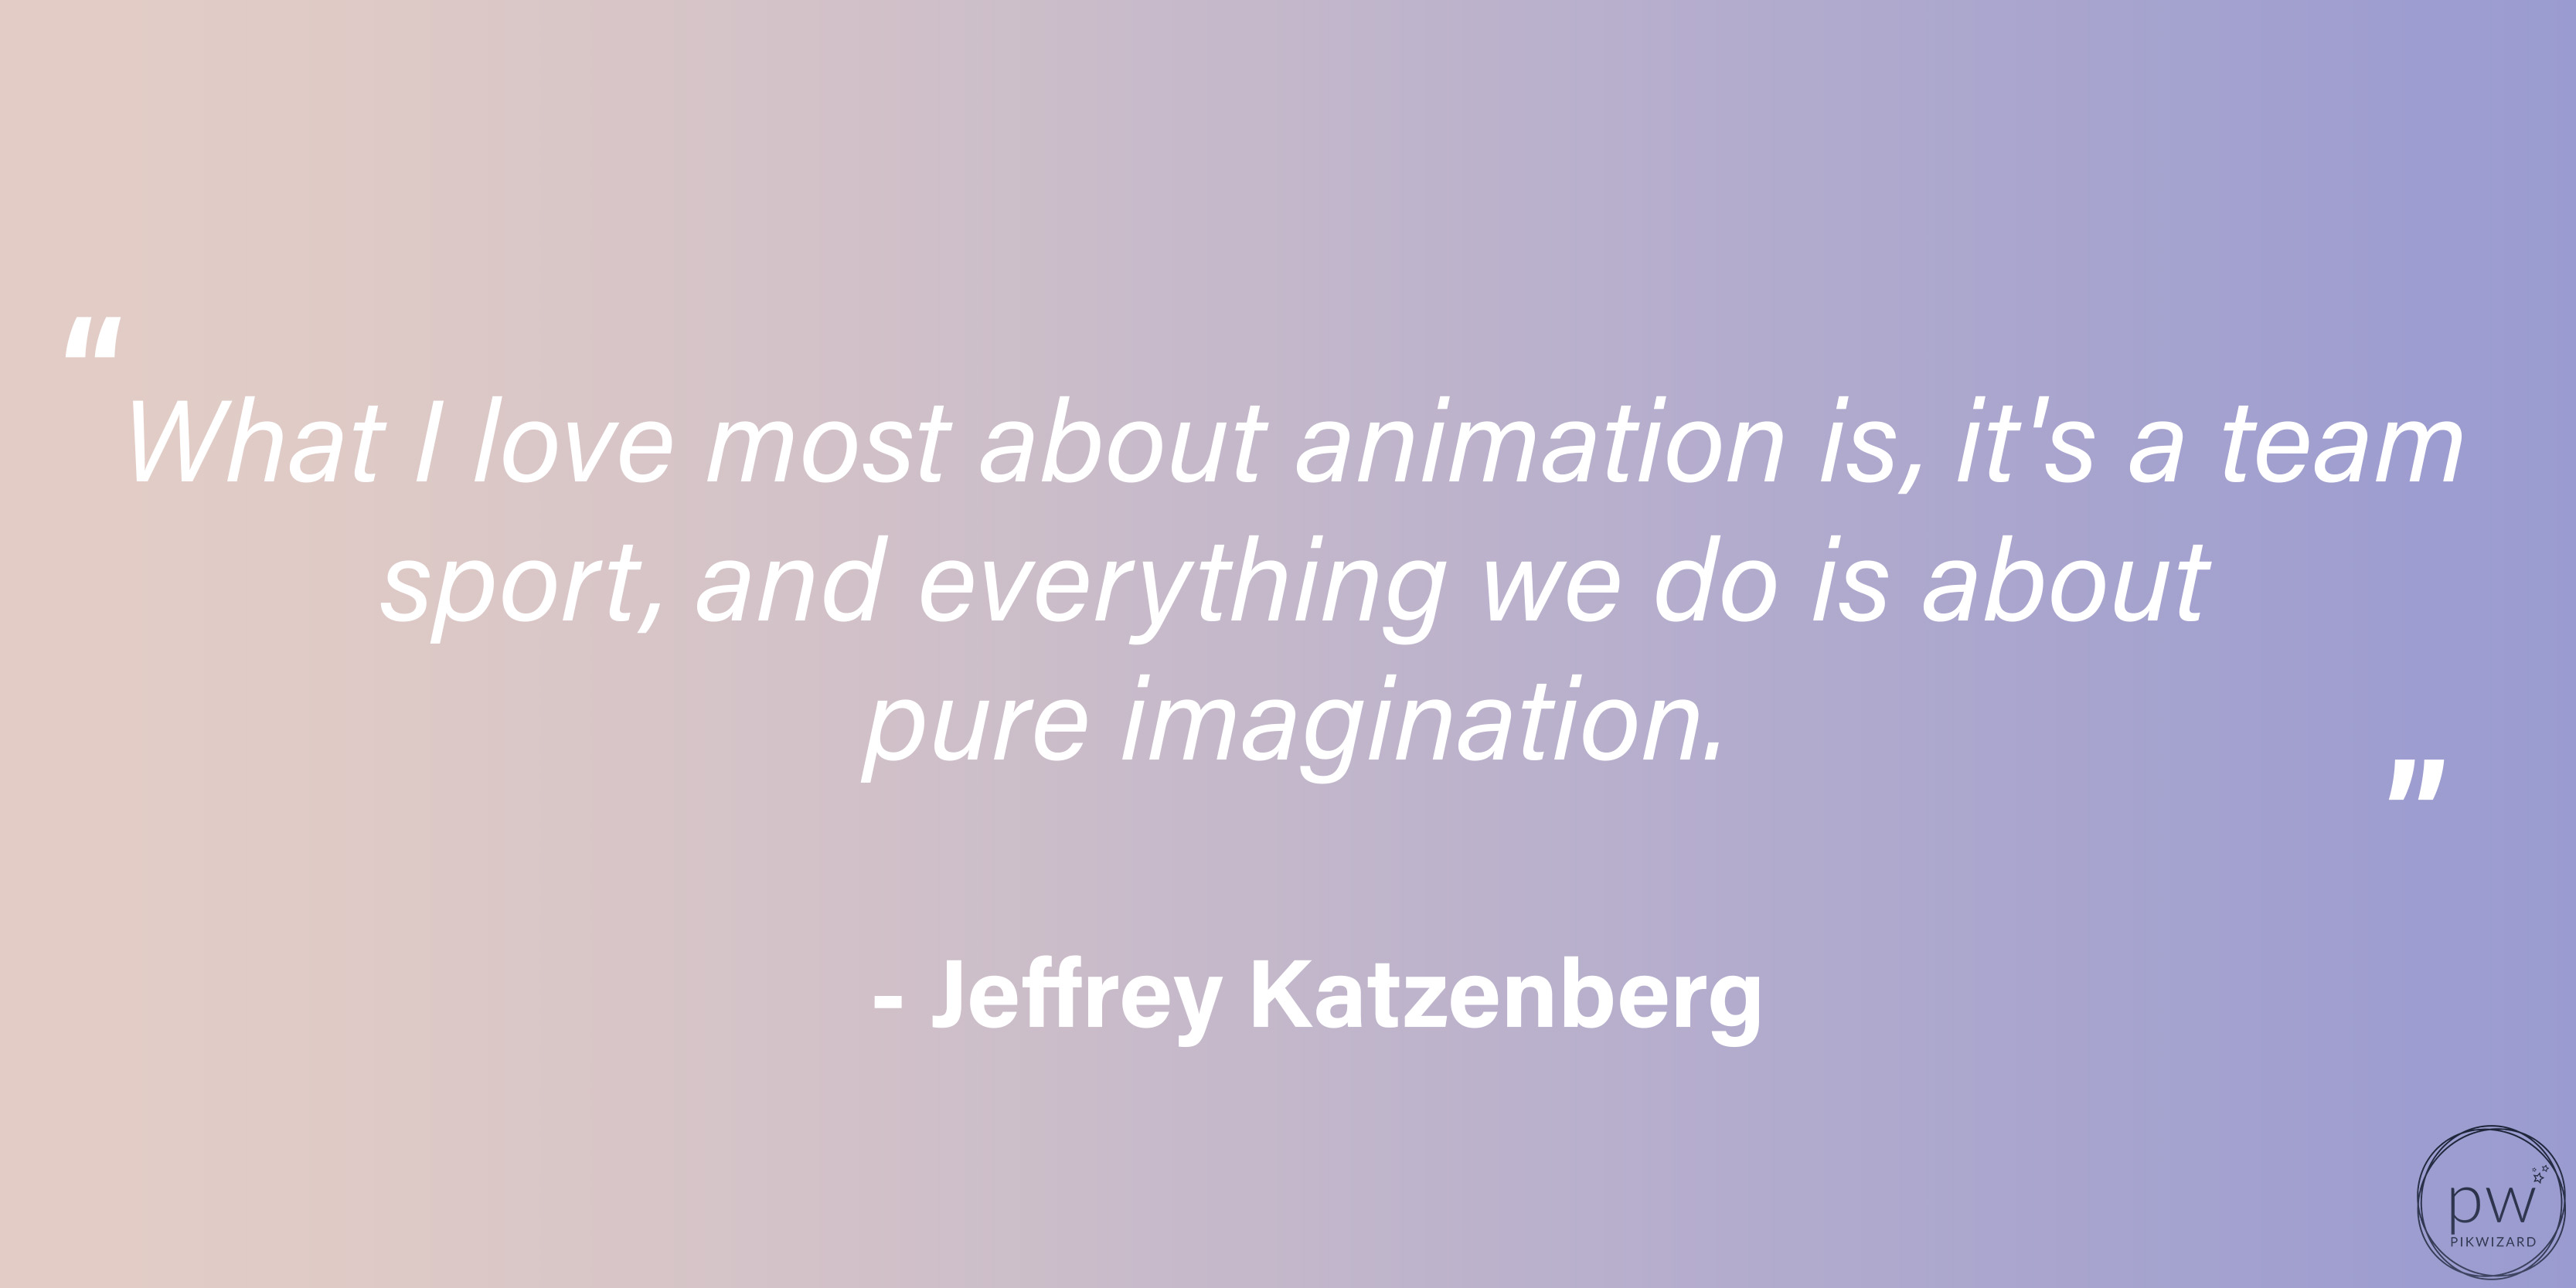 Jeffrey Katzenberg quote on a purple and pink gradient background - Teamwork in animation design - Image